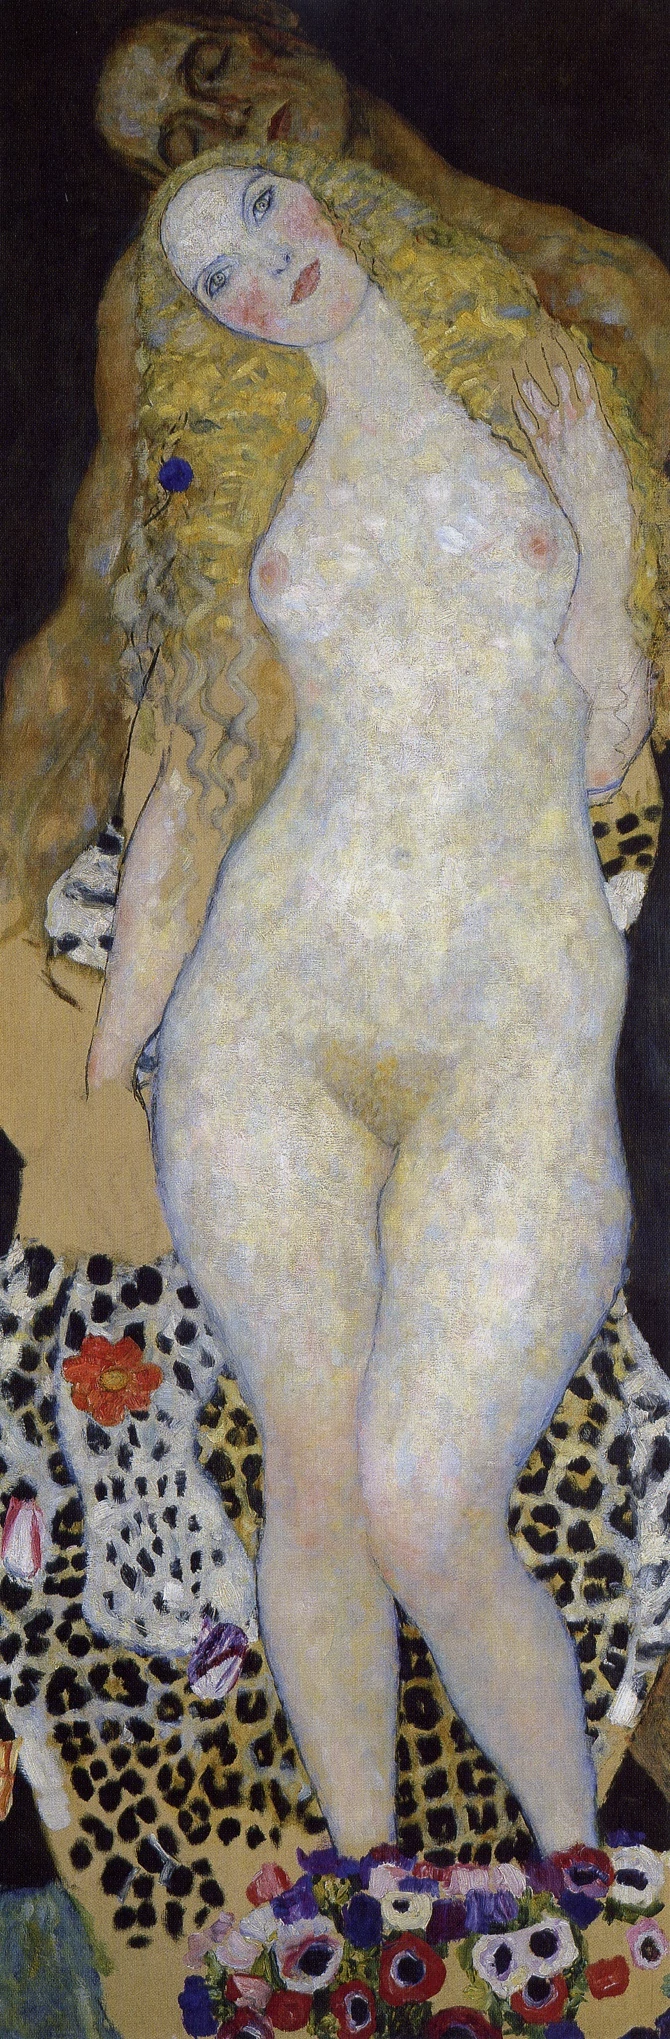 Adam and Eve, Gustav Klimt